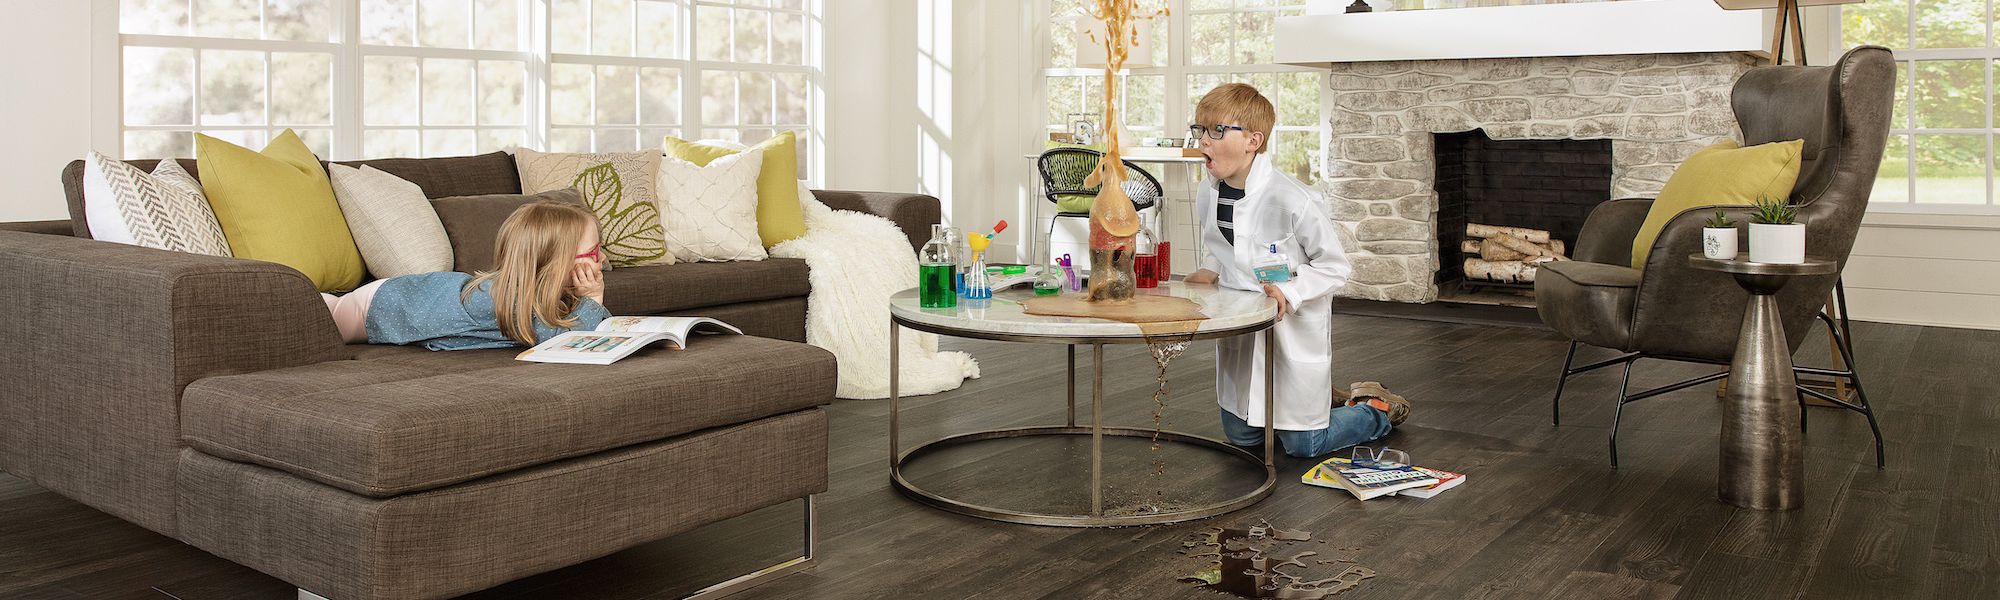 kid-friendly, spill-proof hardwood floors in messy living room